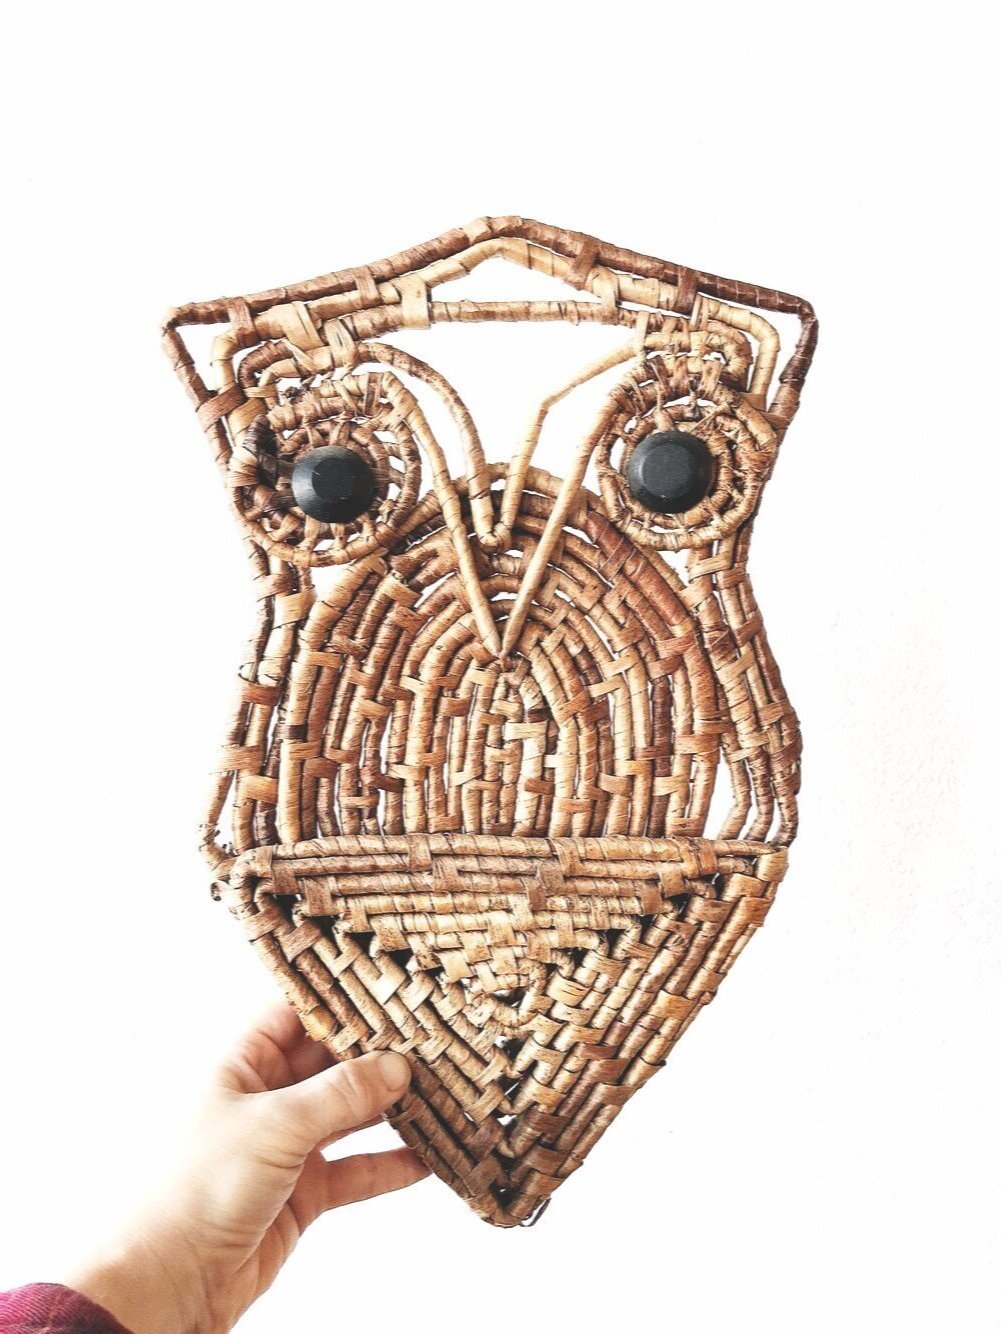 Quirky Vintage Owl Basket